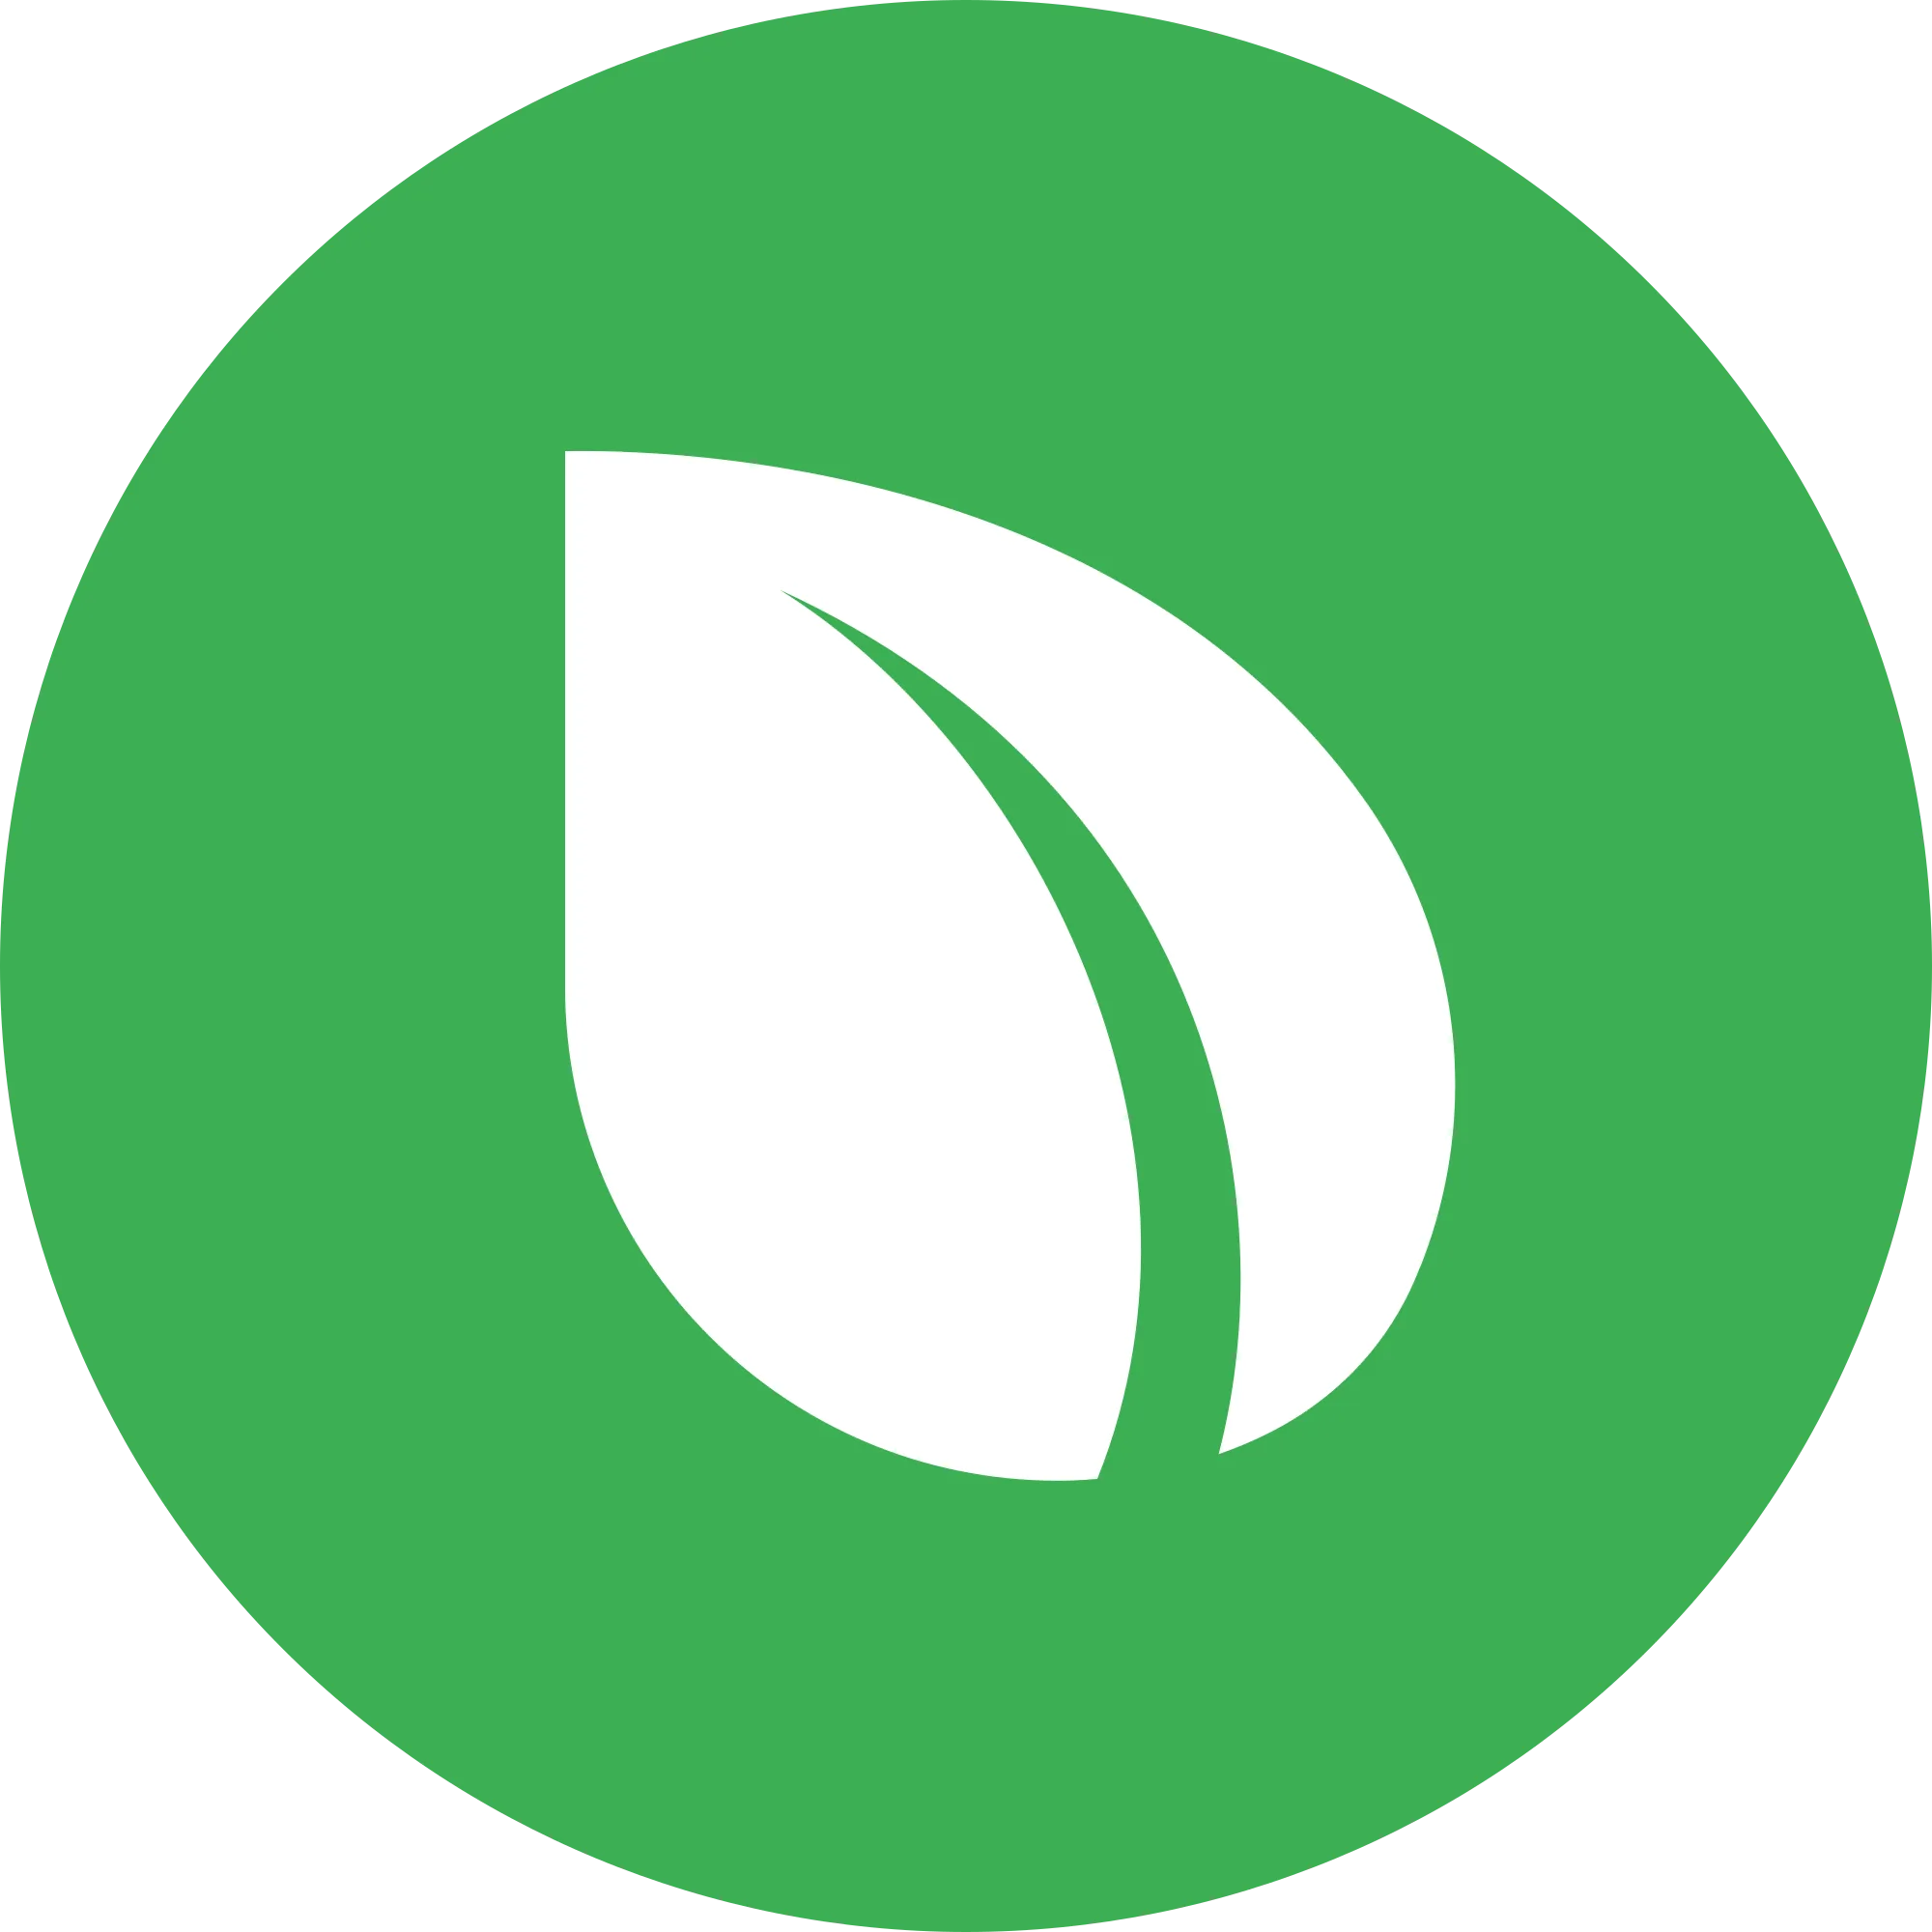 Peercoin logo in png format